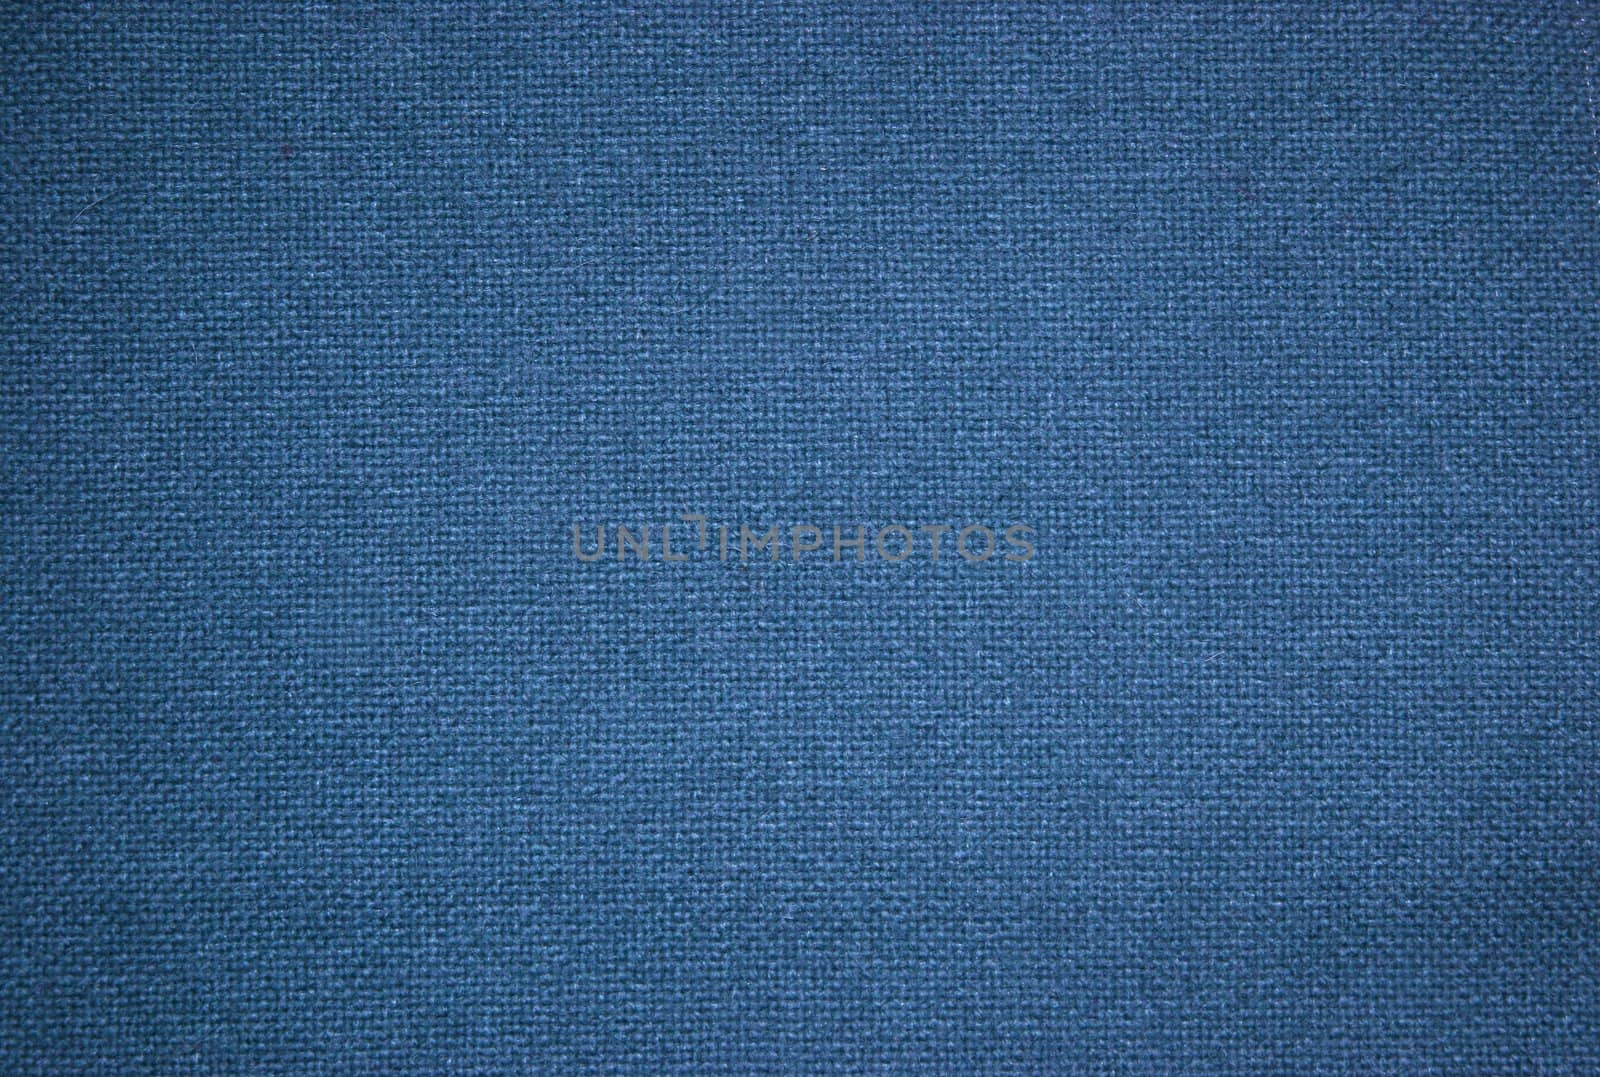 Blue background fabric by klikk